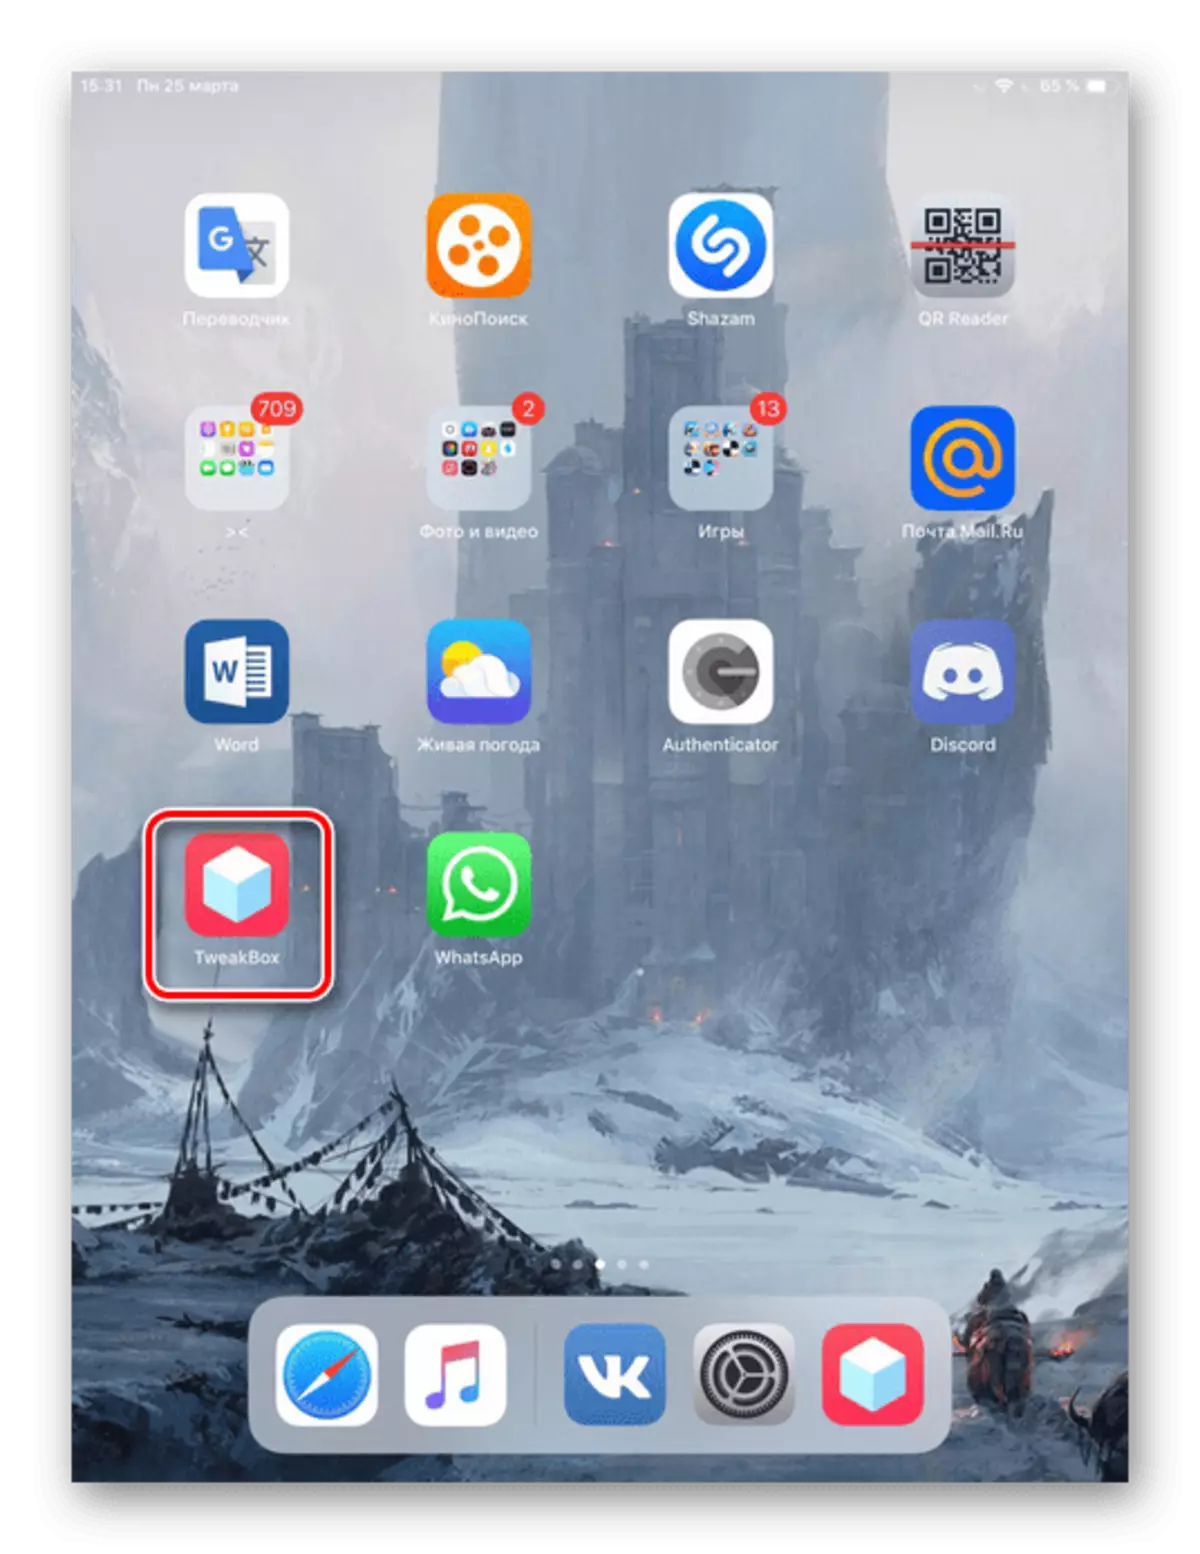 TweakBox application icon sa iPad desktop